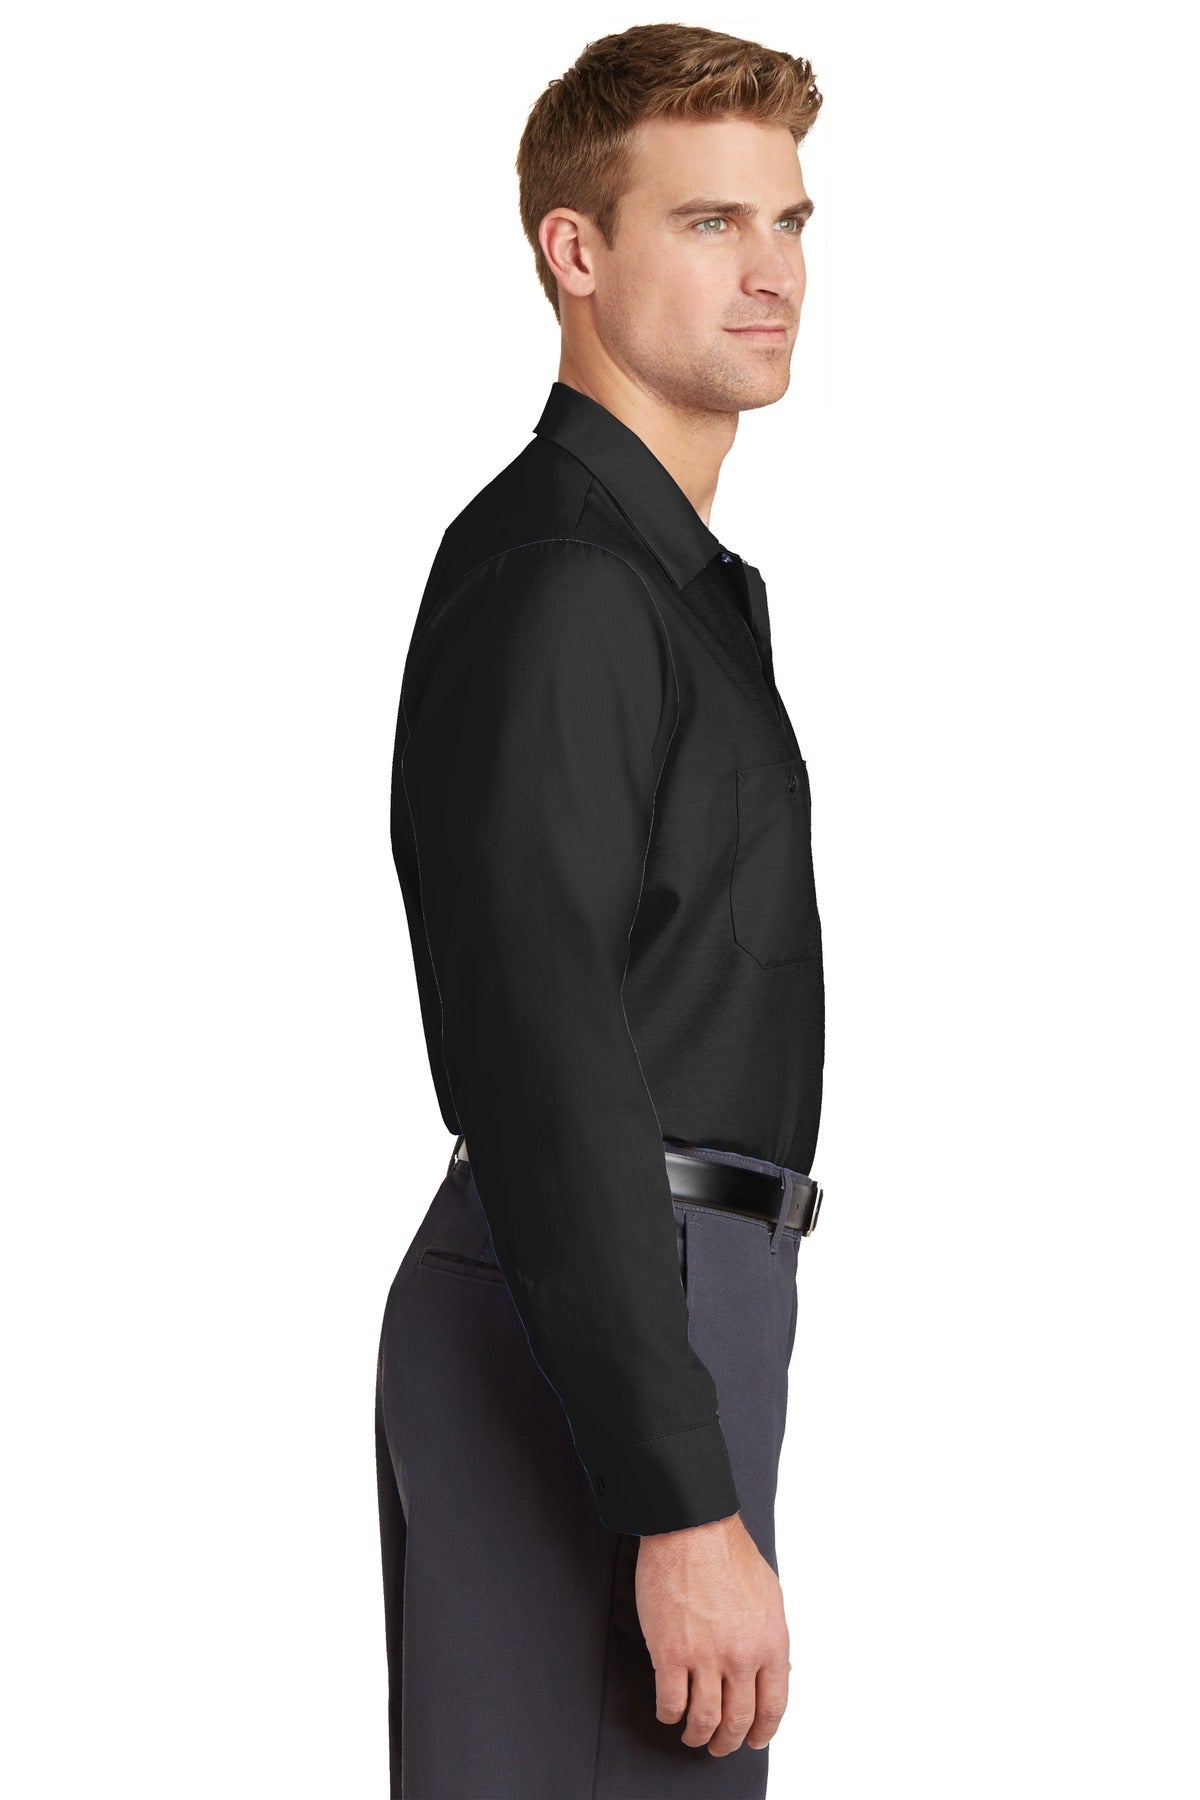 Red Kap® Long Sleeve Industrial Work Shirt. SP14 - DFW Impression